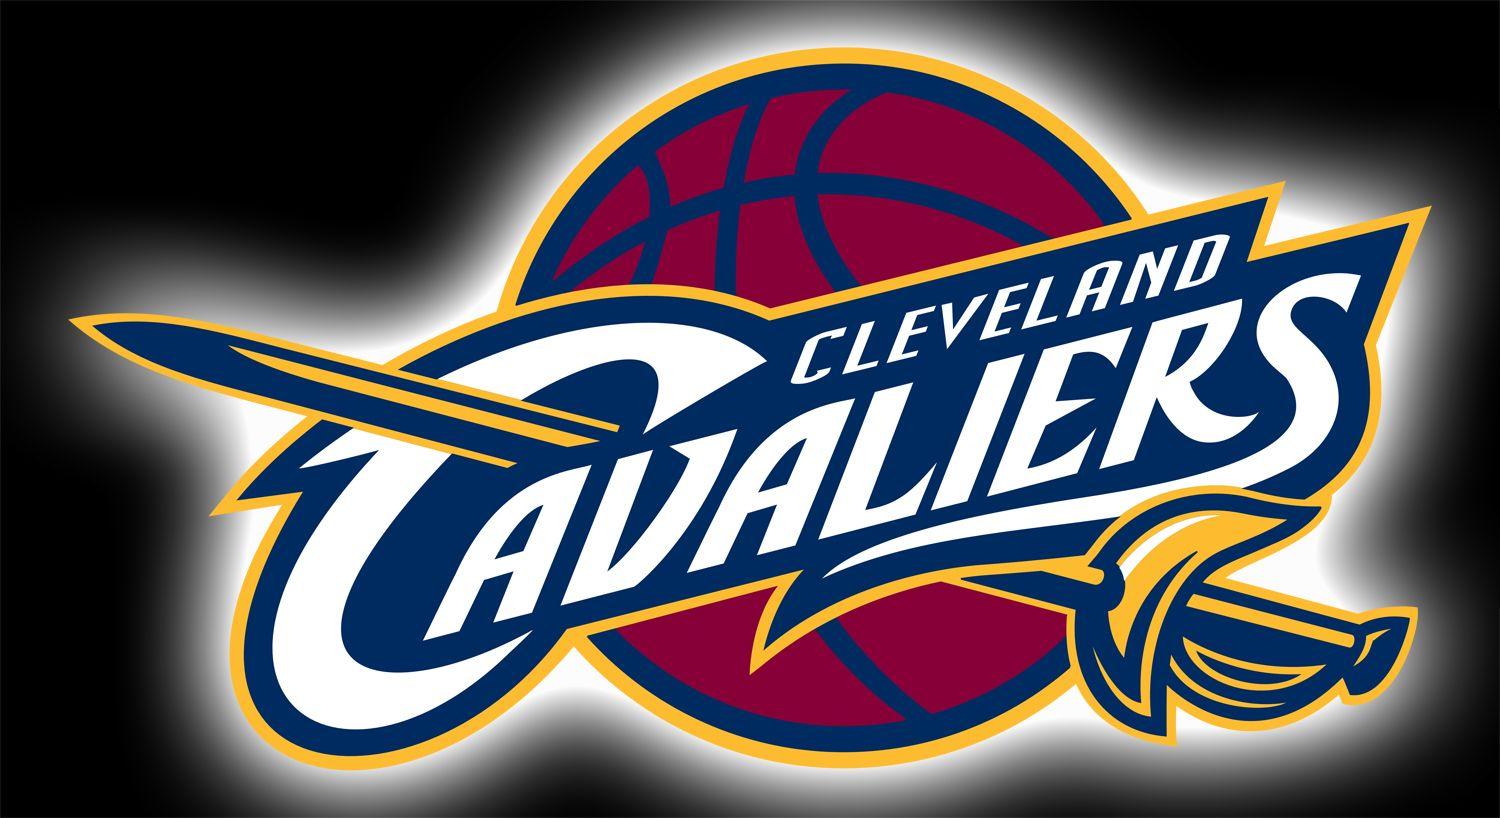 Cavs Logo - CAVS Logo, Cleveland Cavaliers symbol, meaning